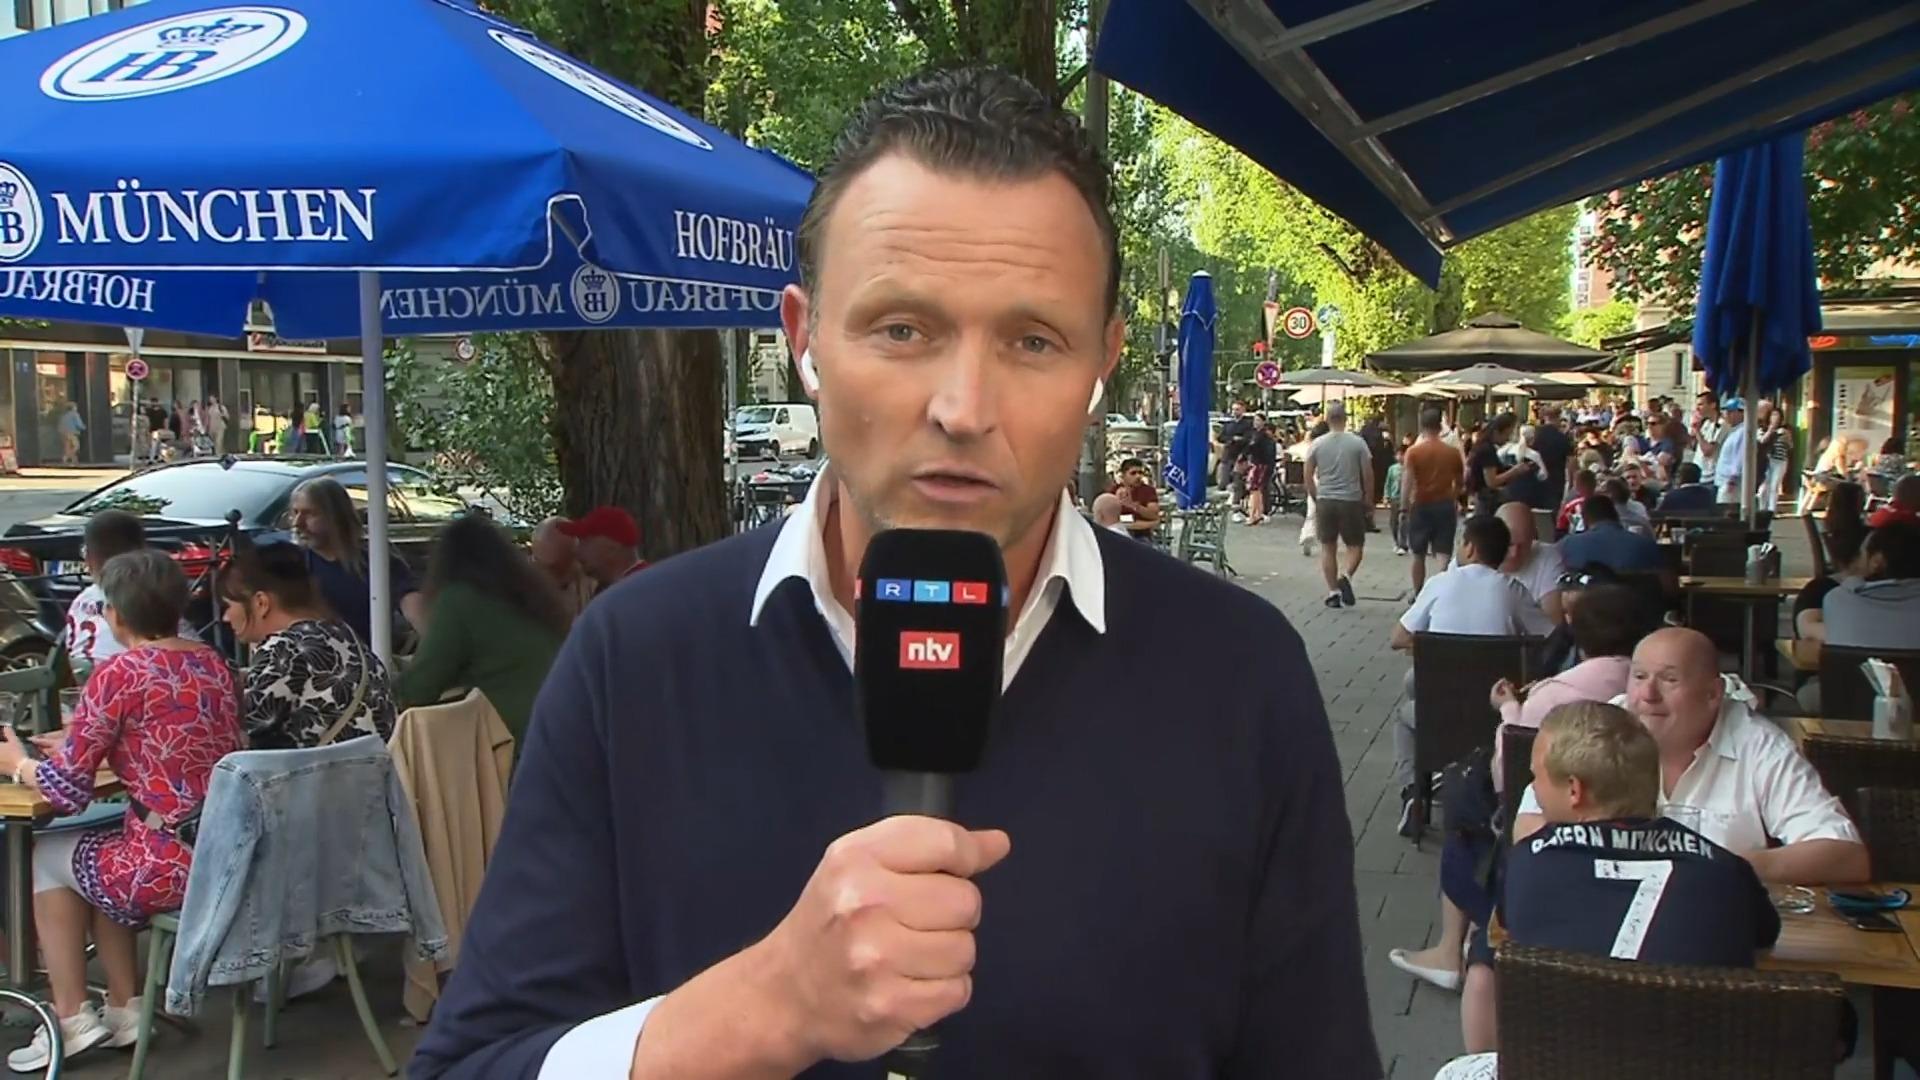 RTL-Reporter: Bayern machen tabula rasa Brazzo und Kahn entlassen